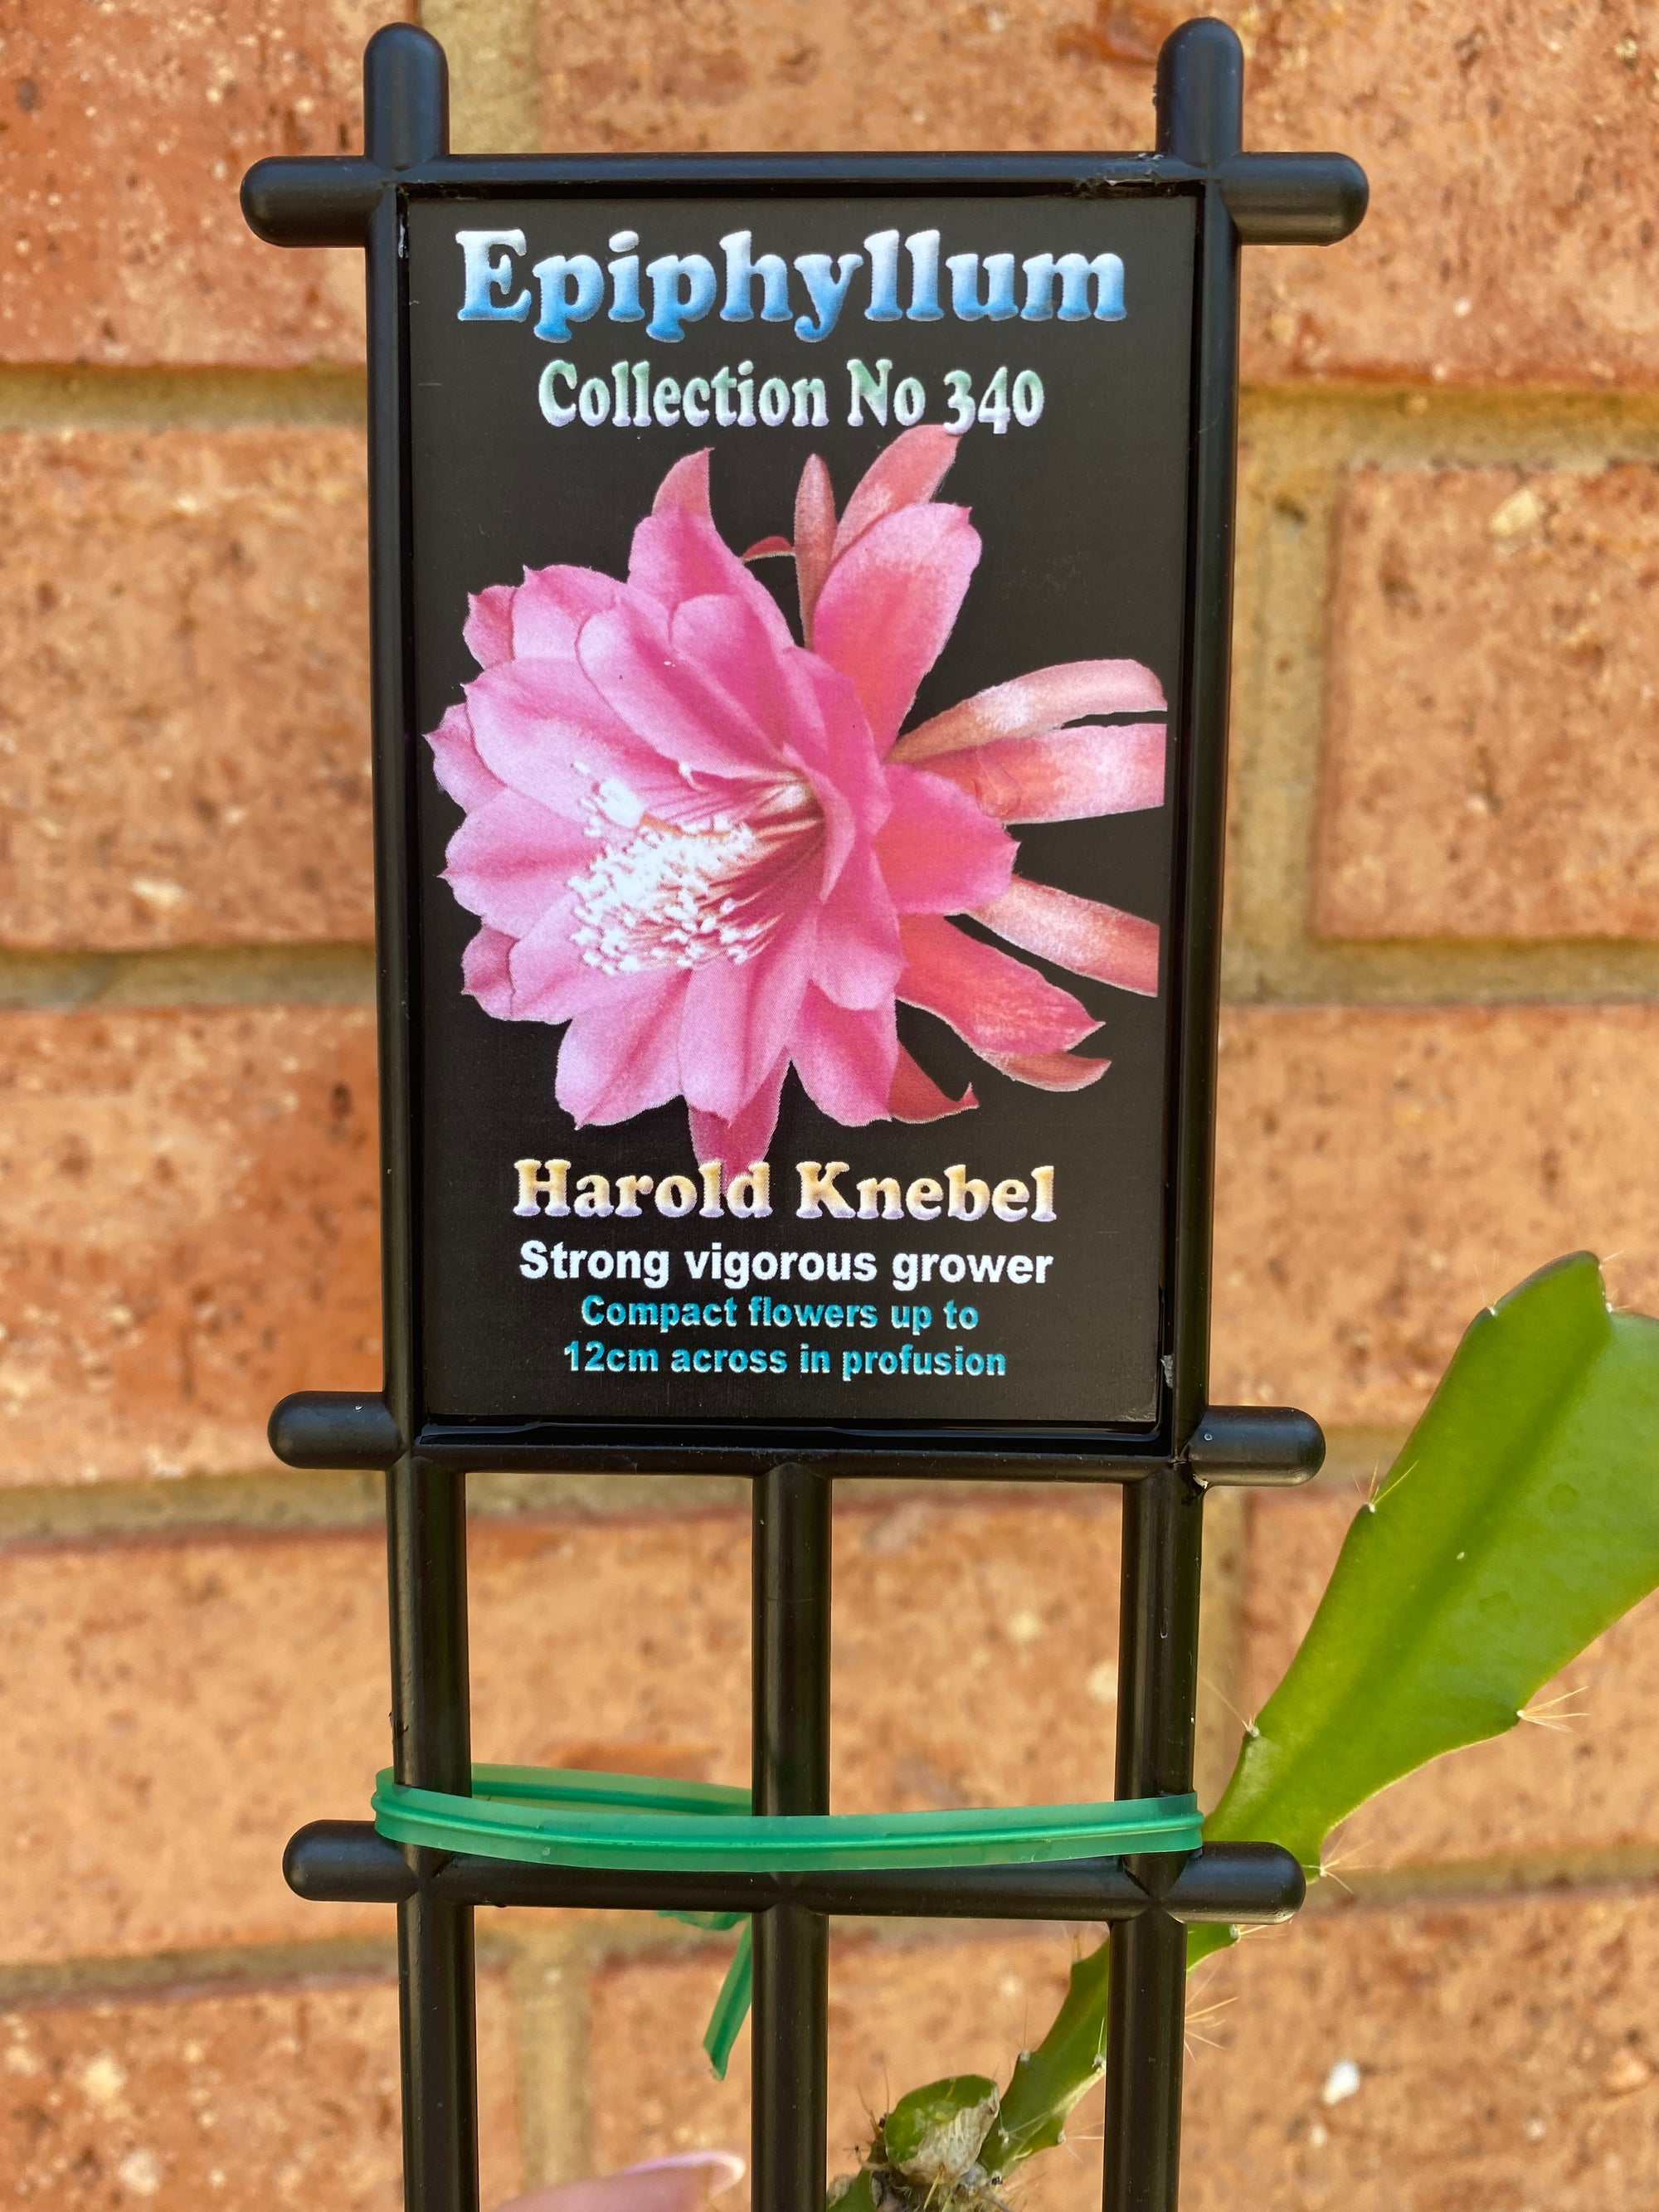 Epiphyllum 'Harold Knebel' - Collection No. 340